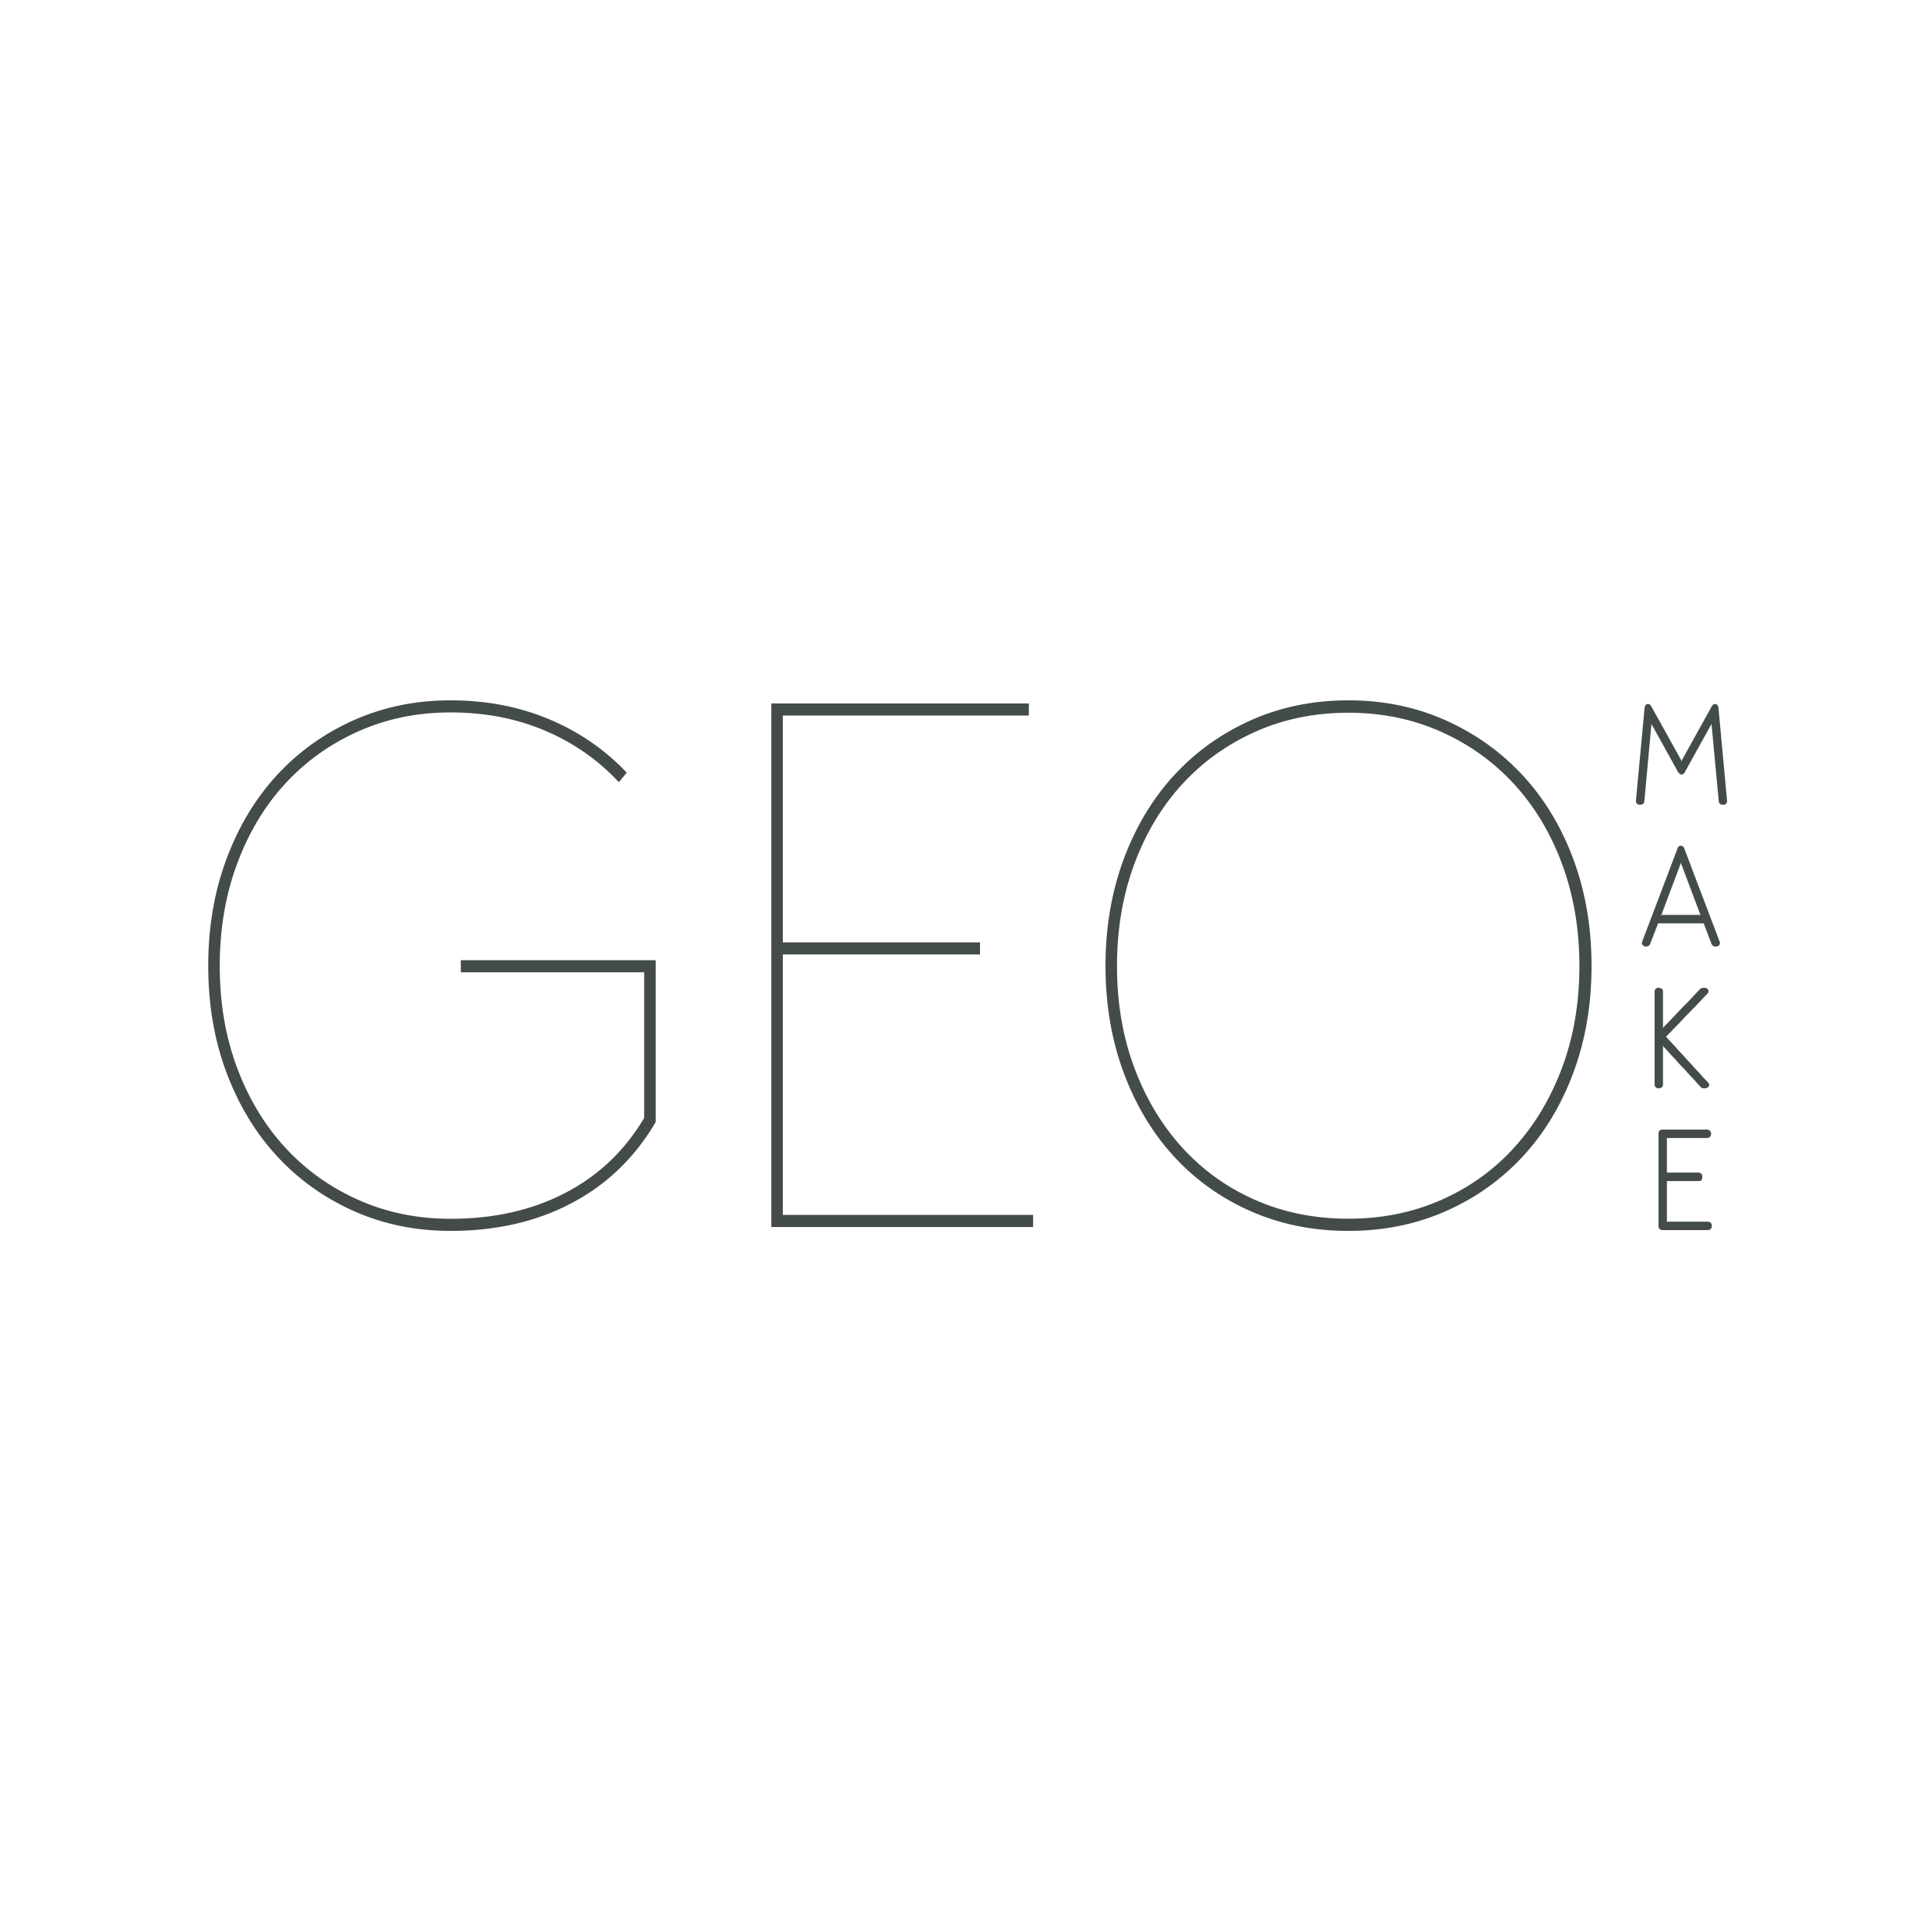 geo make logo square no background.png